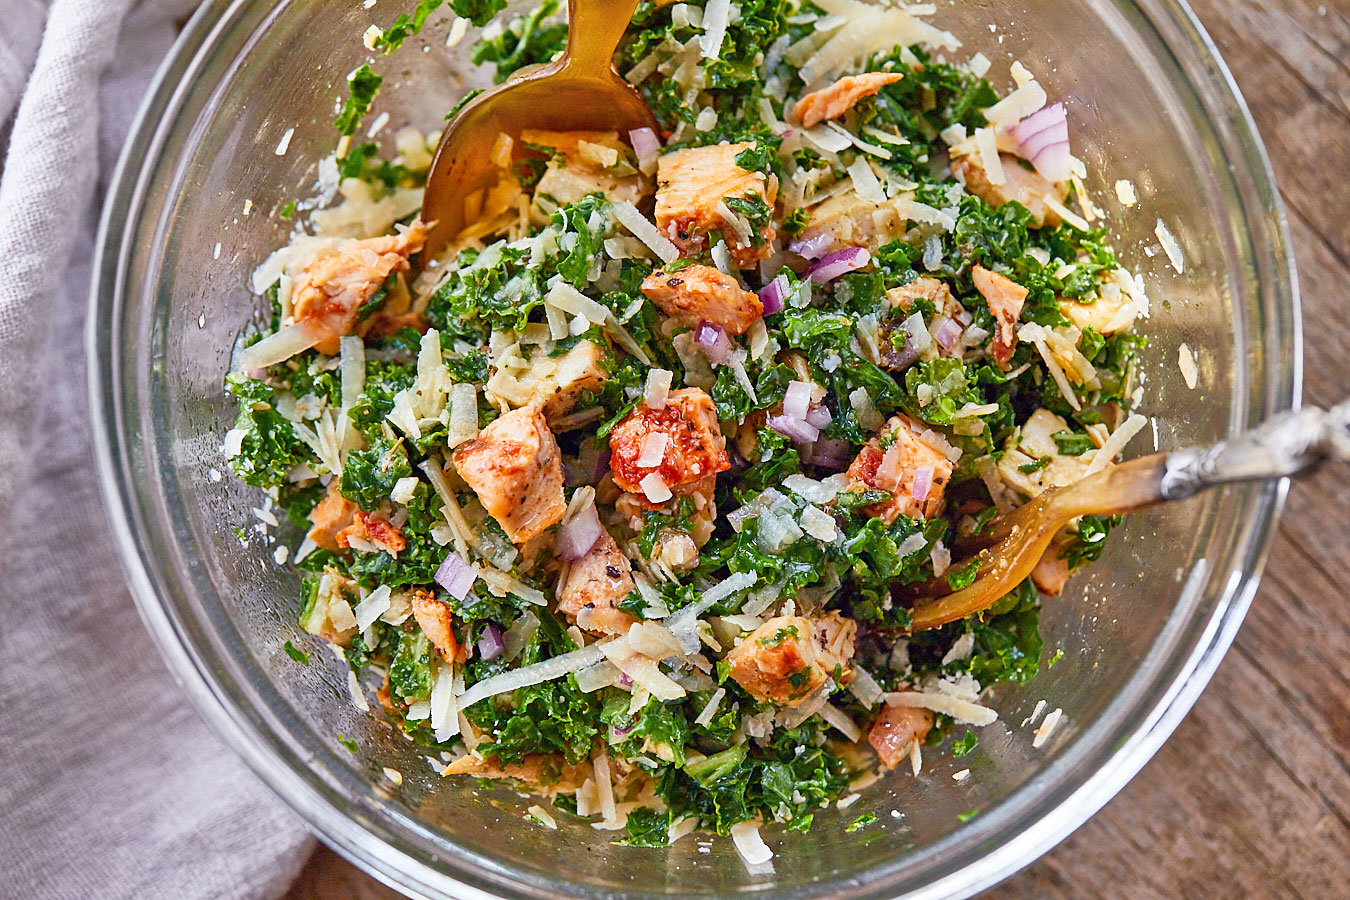 https://www.eatwell101.com/wp-content/uploads/2019/10/Chicken-Parmesan-Kale-Salad-Recipe-3.jpg